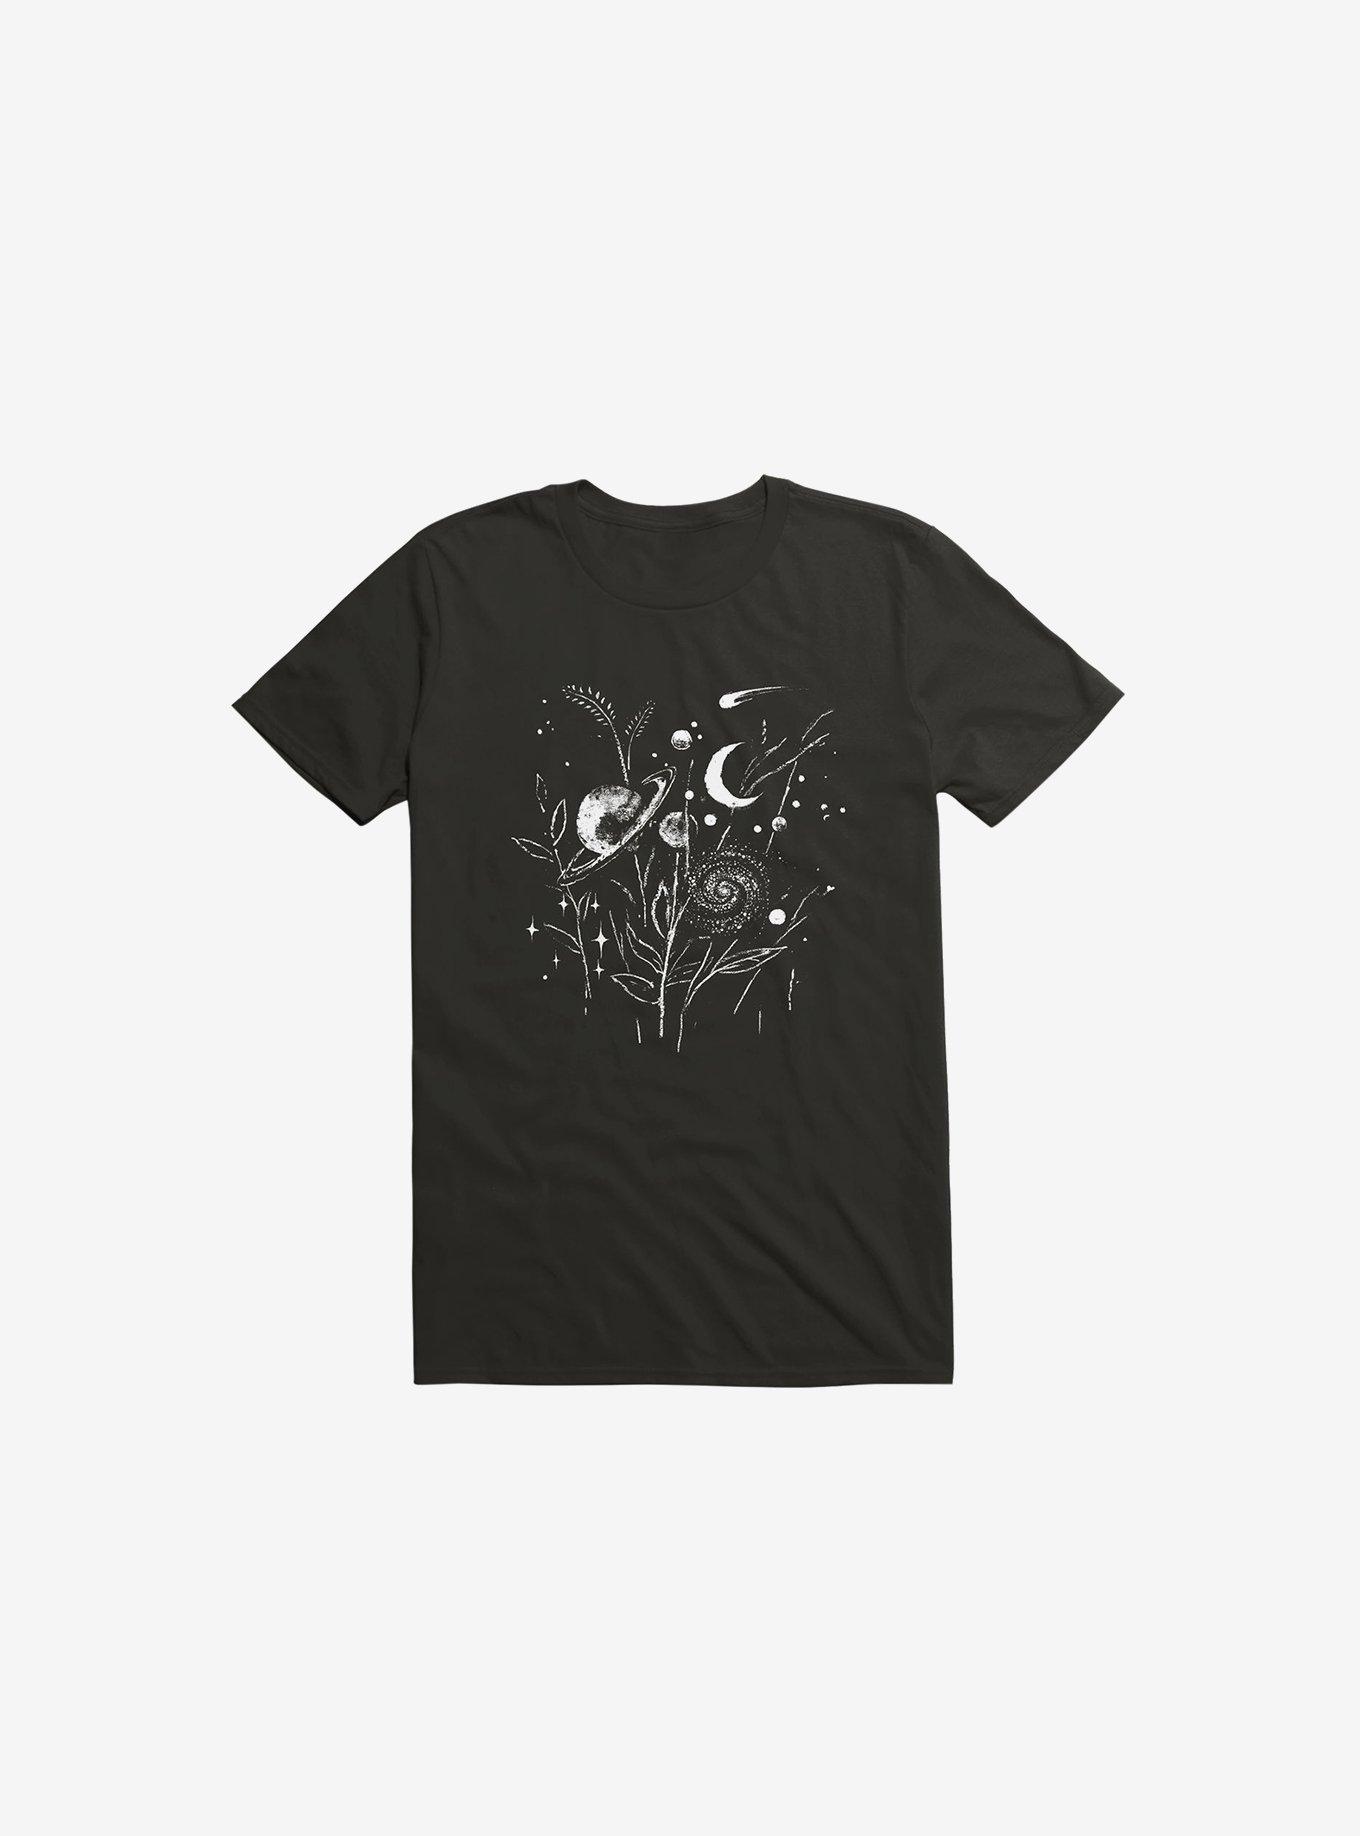 Space Botanica T-Shirt, NAVY, hi-res